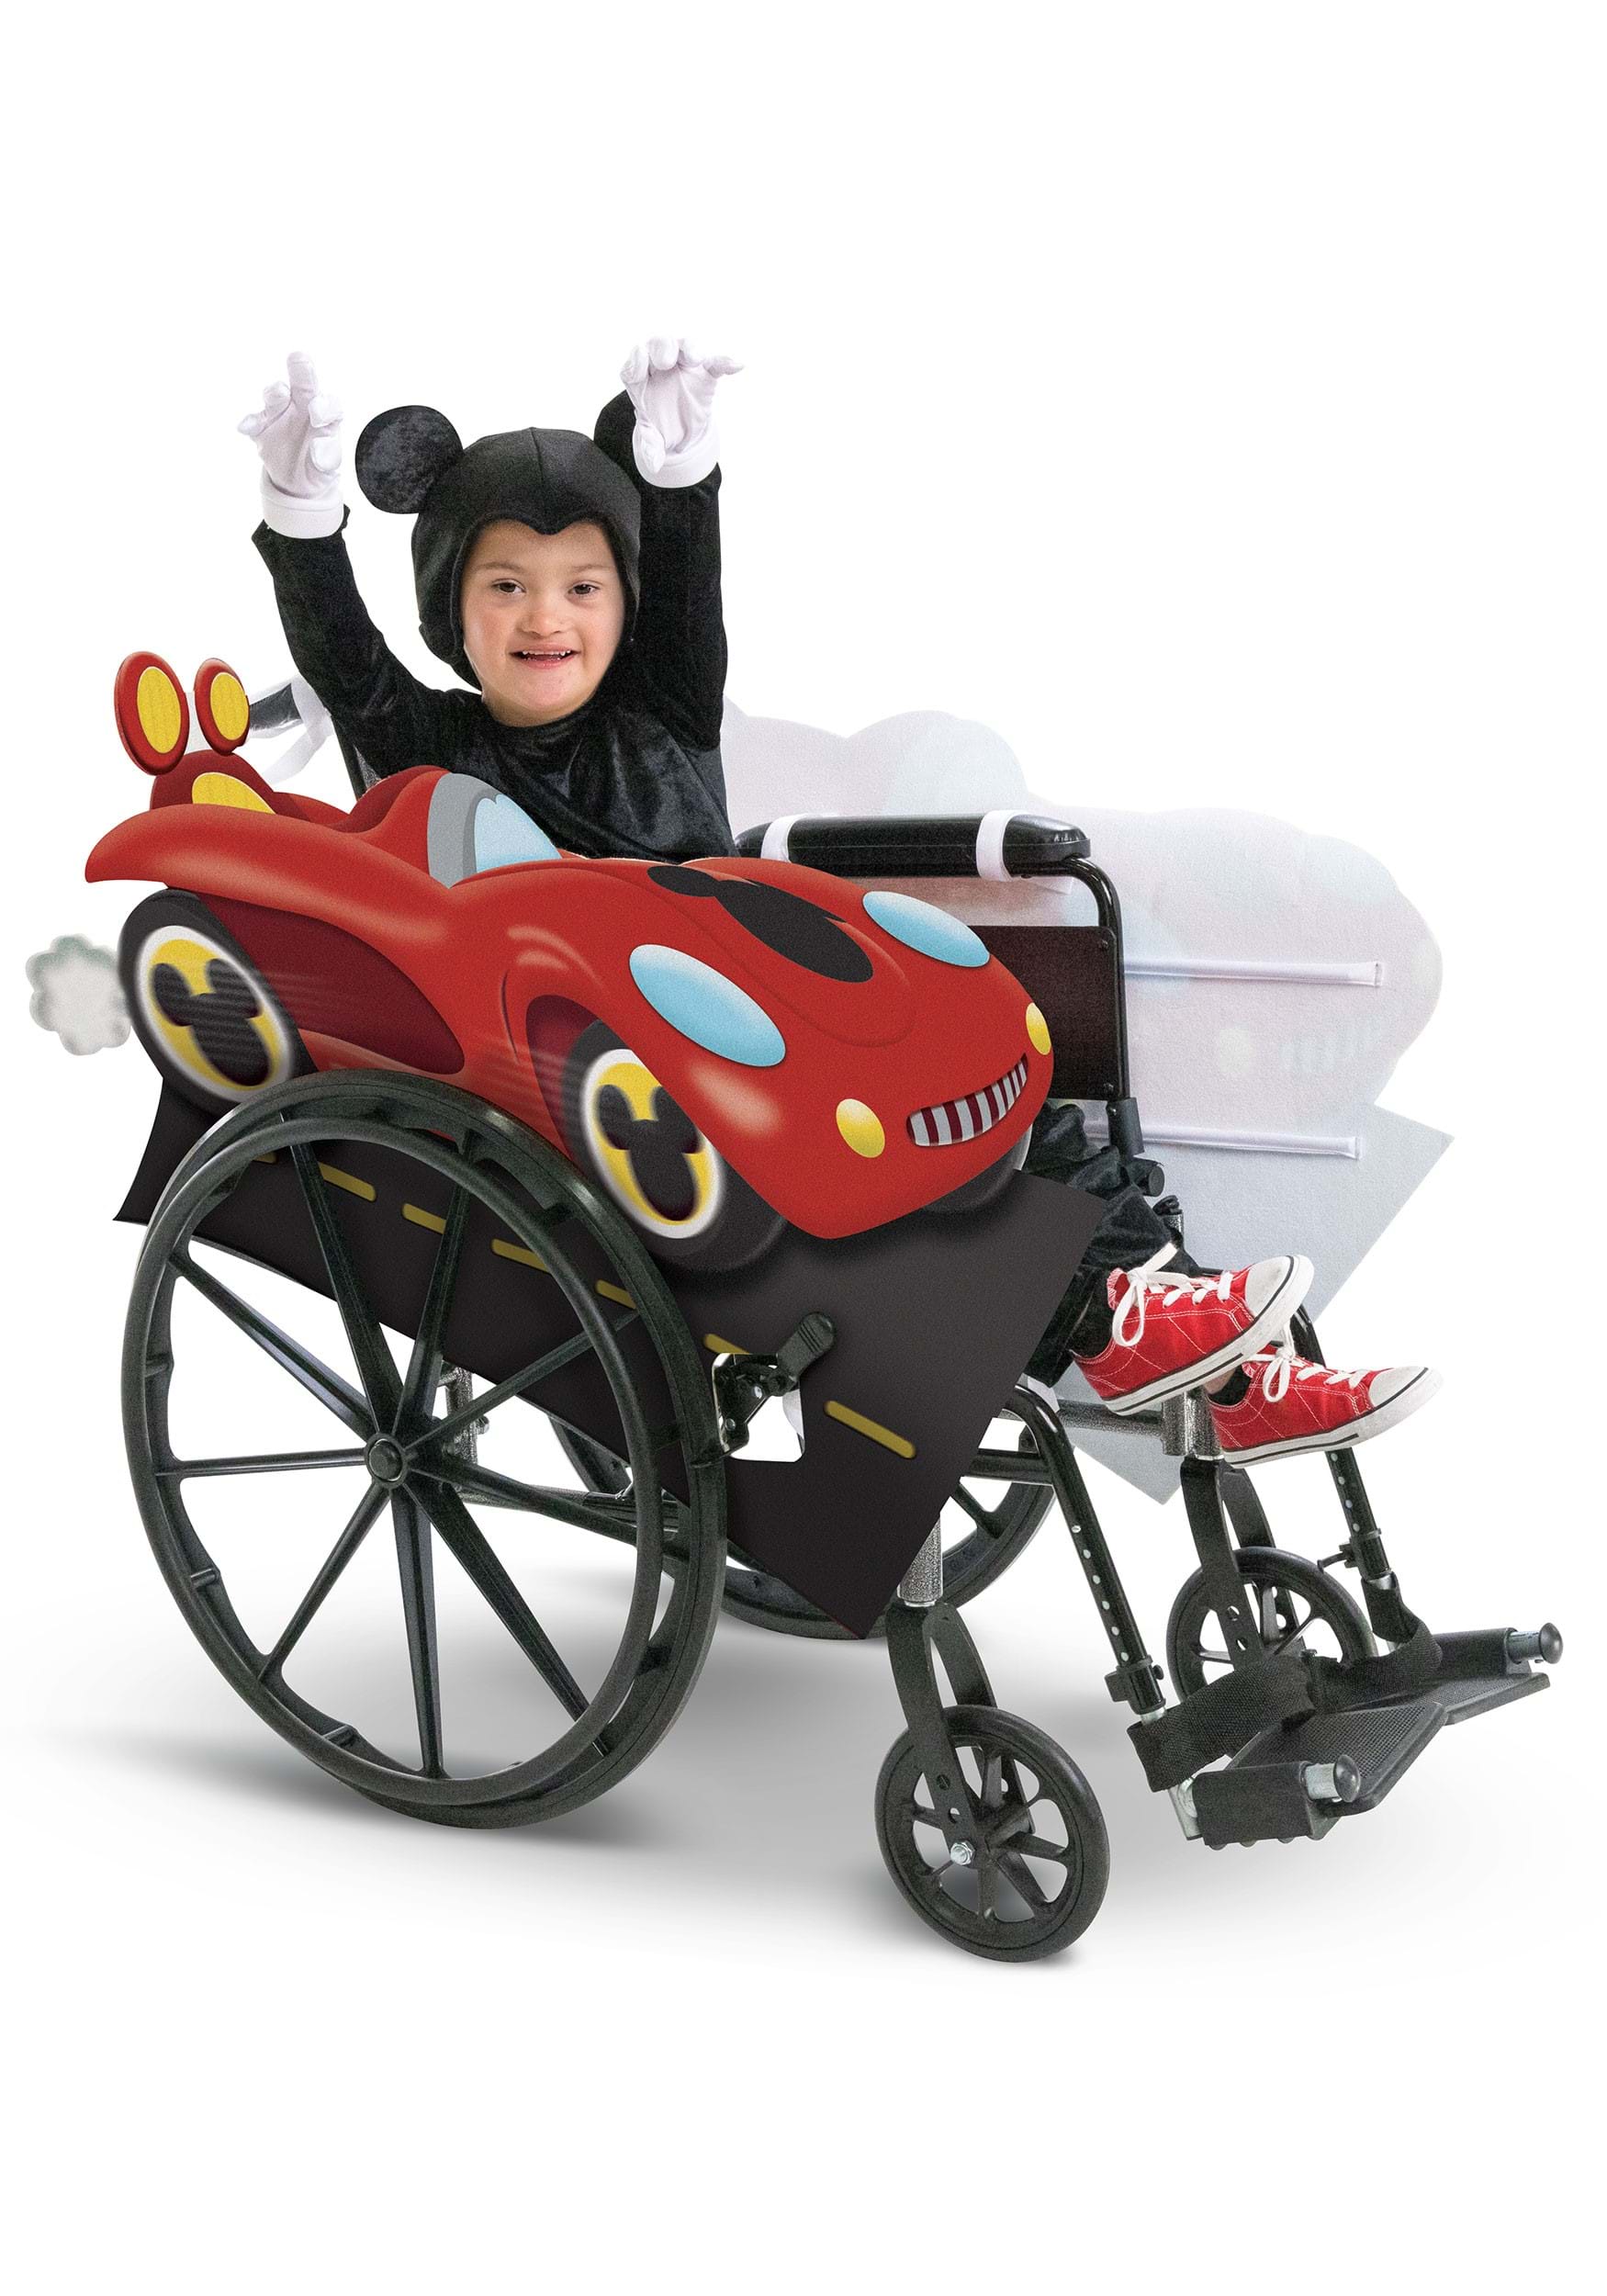 Mickey Mouse Kid's Adaptive Costume